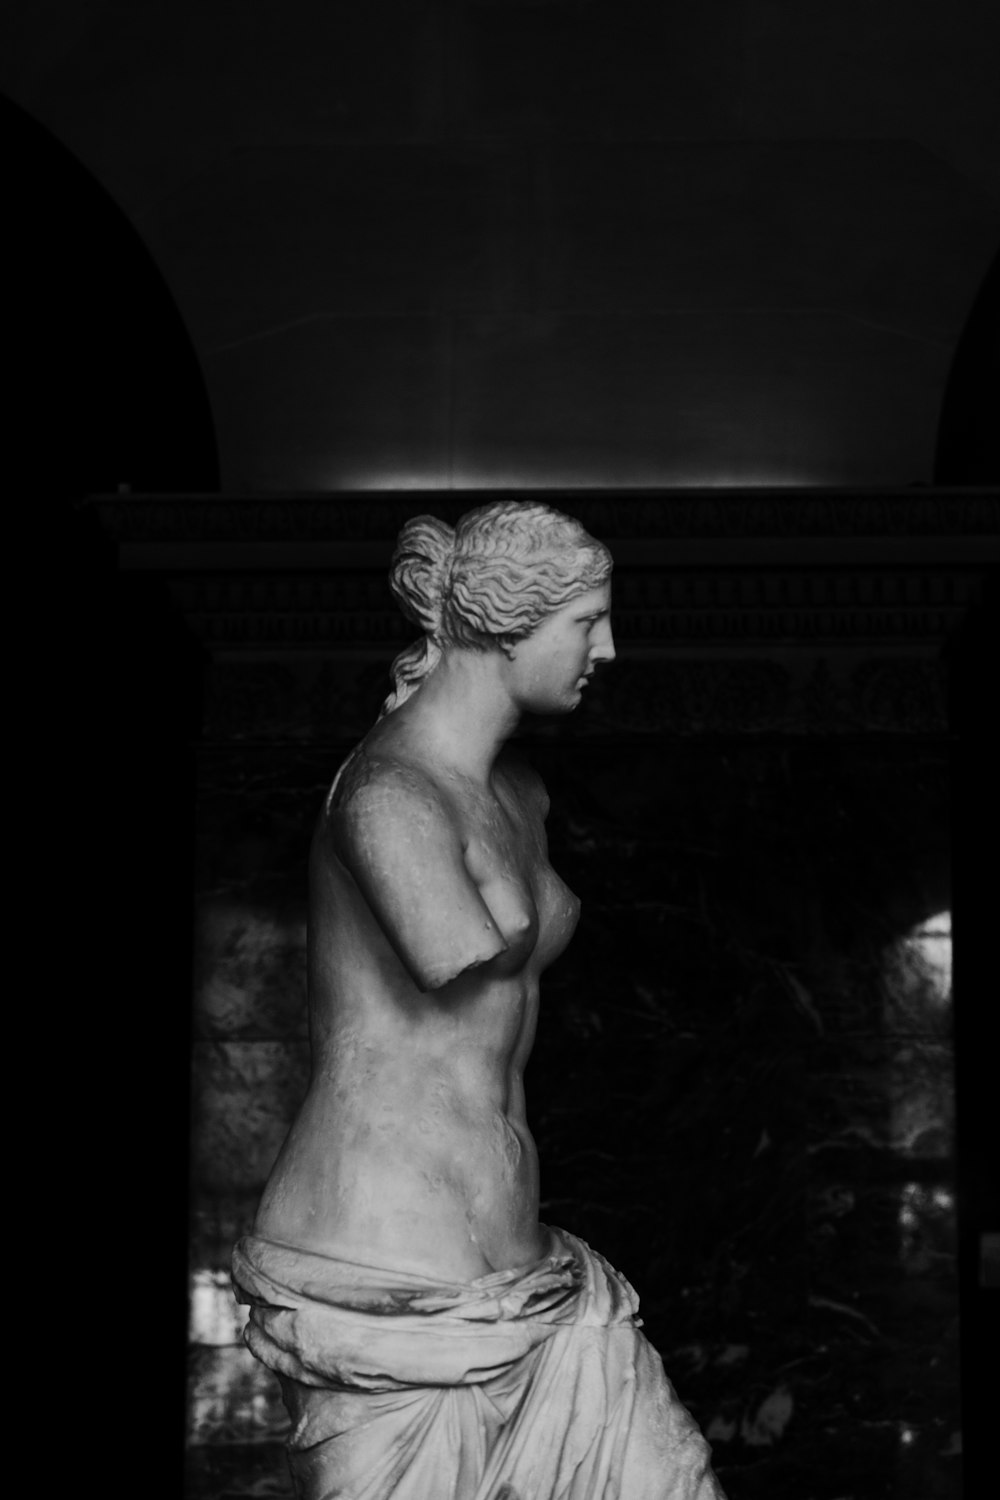 Venus de Milo statue in grayscale photography